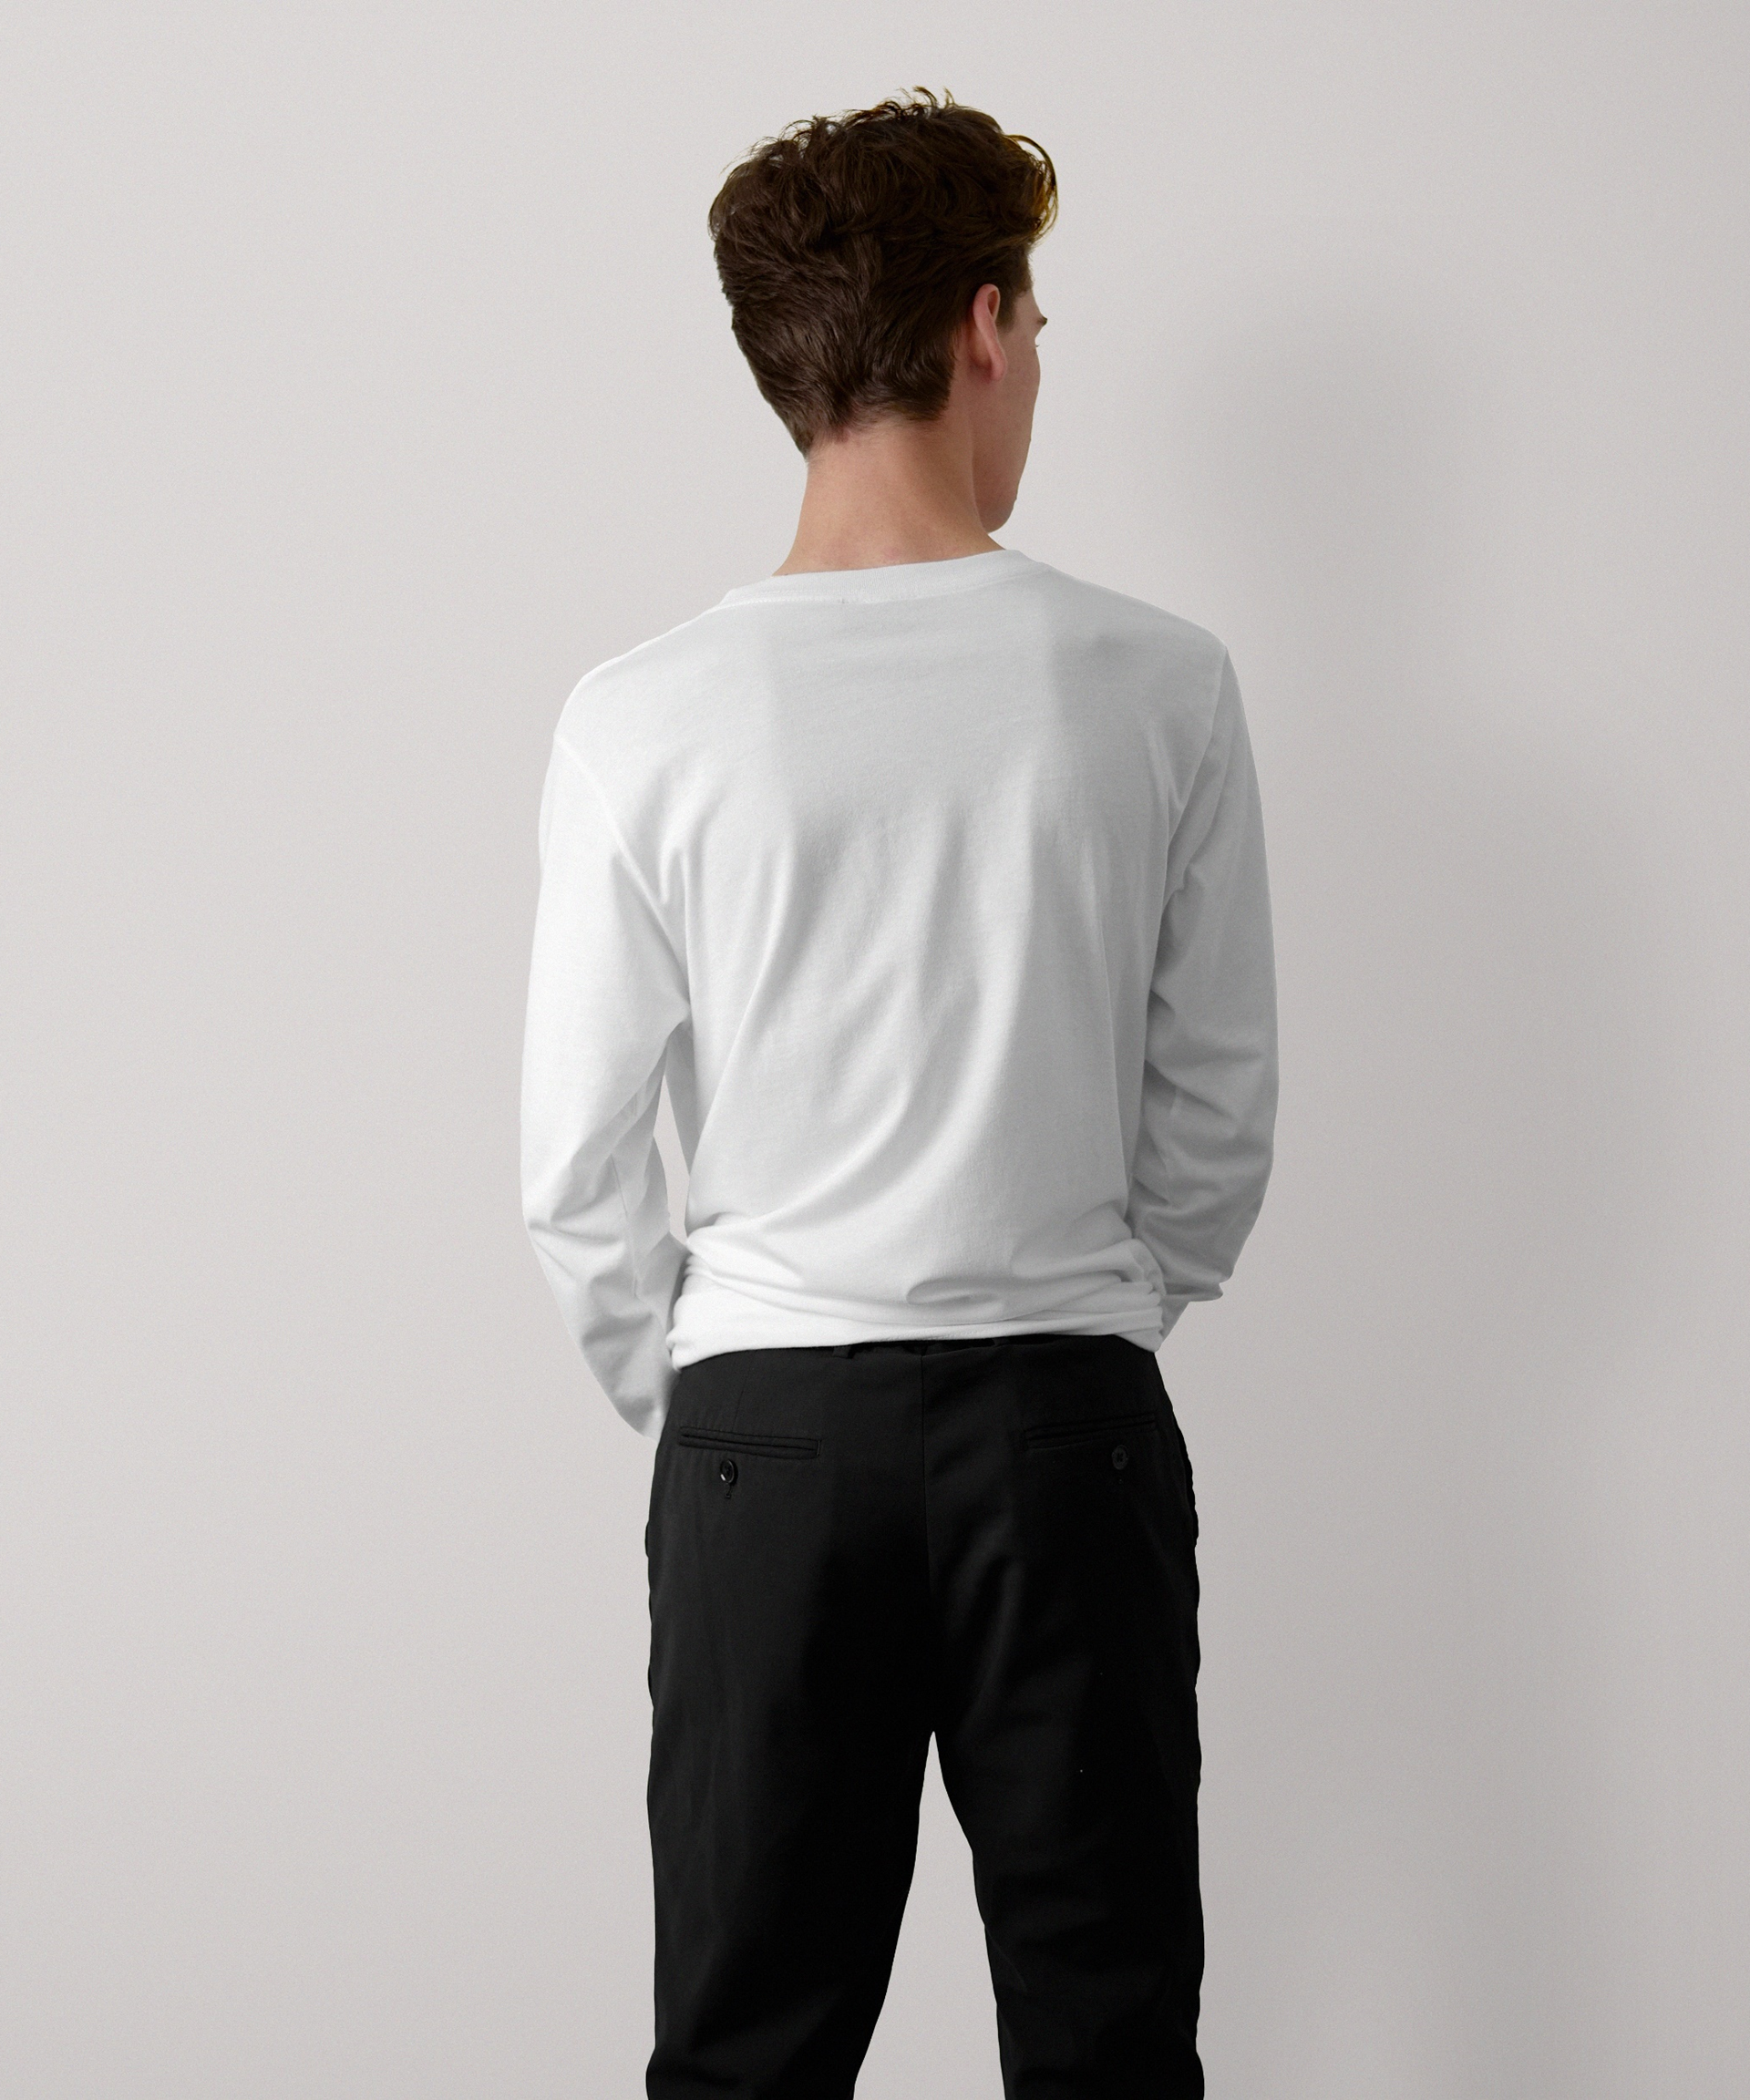 Essential Long Sleeve T-Shirt for Men (White)